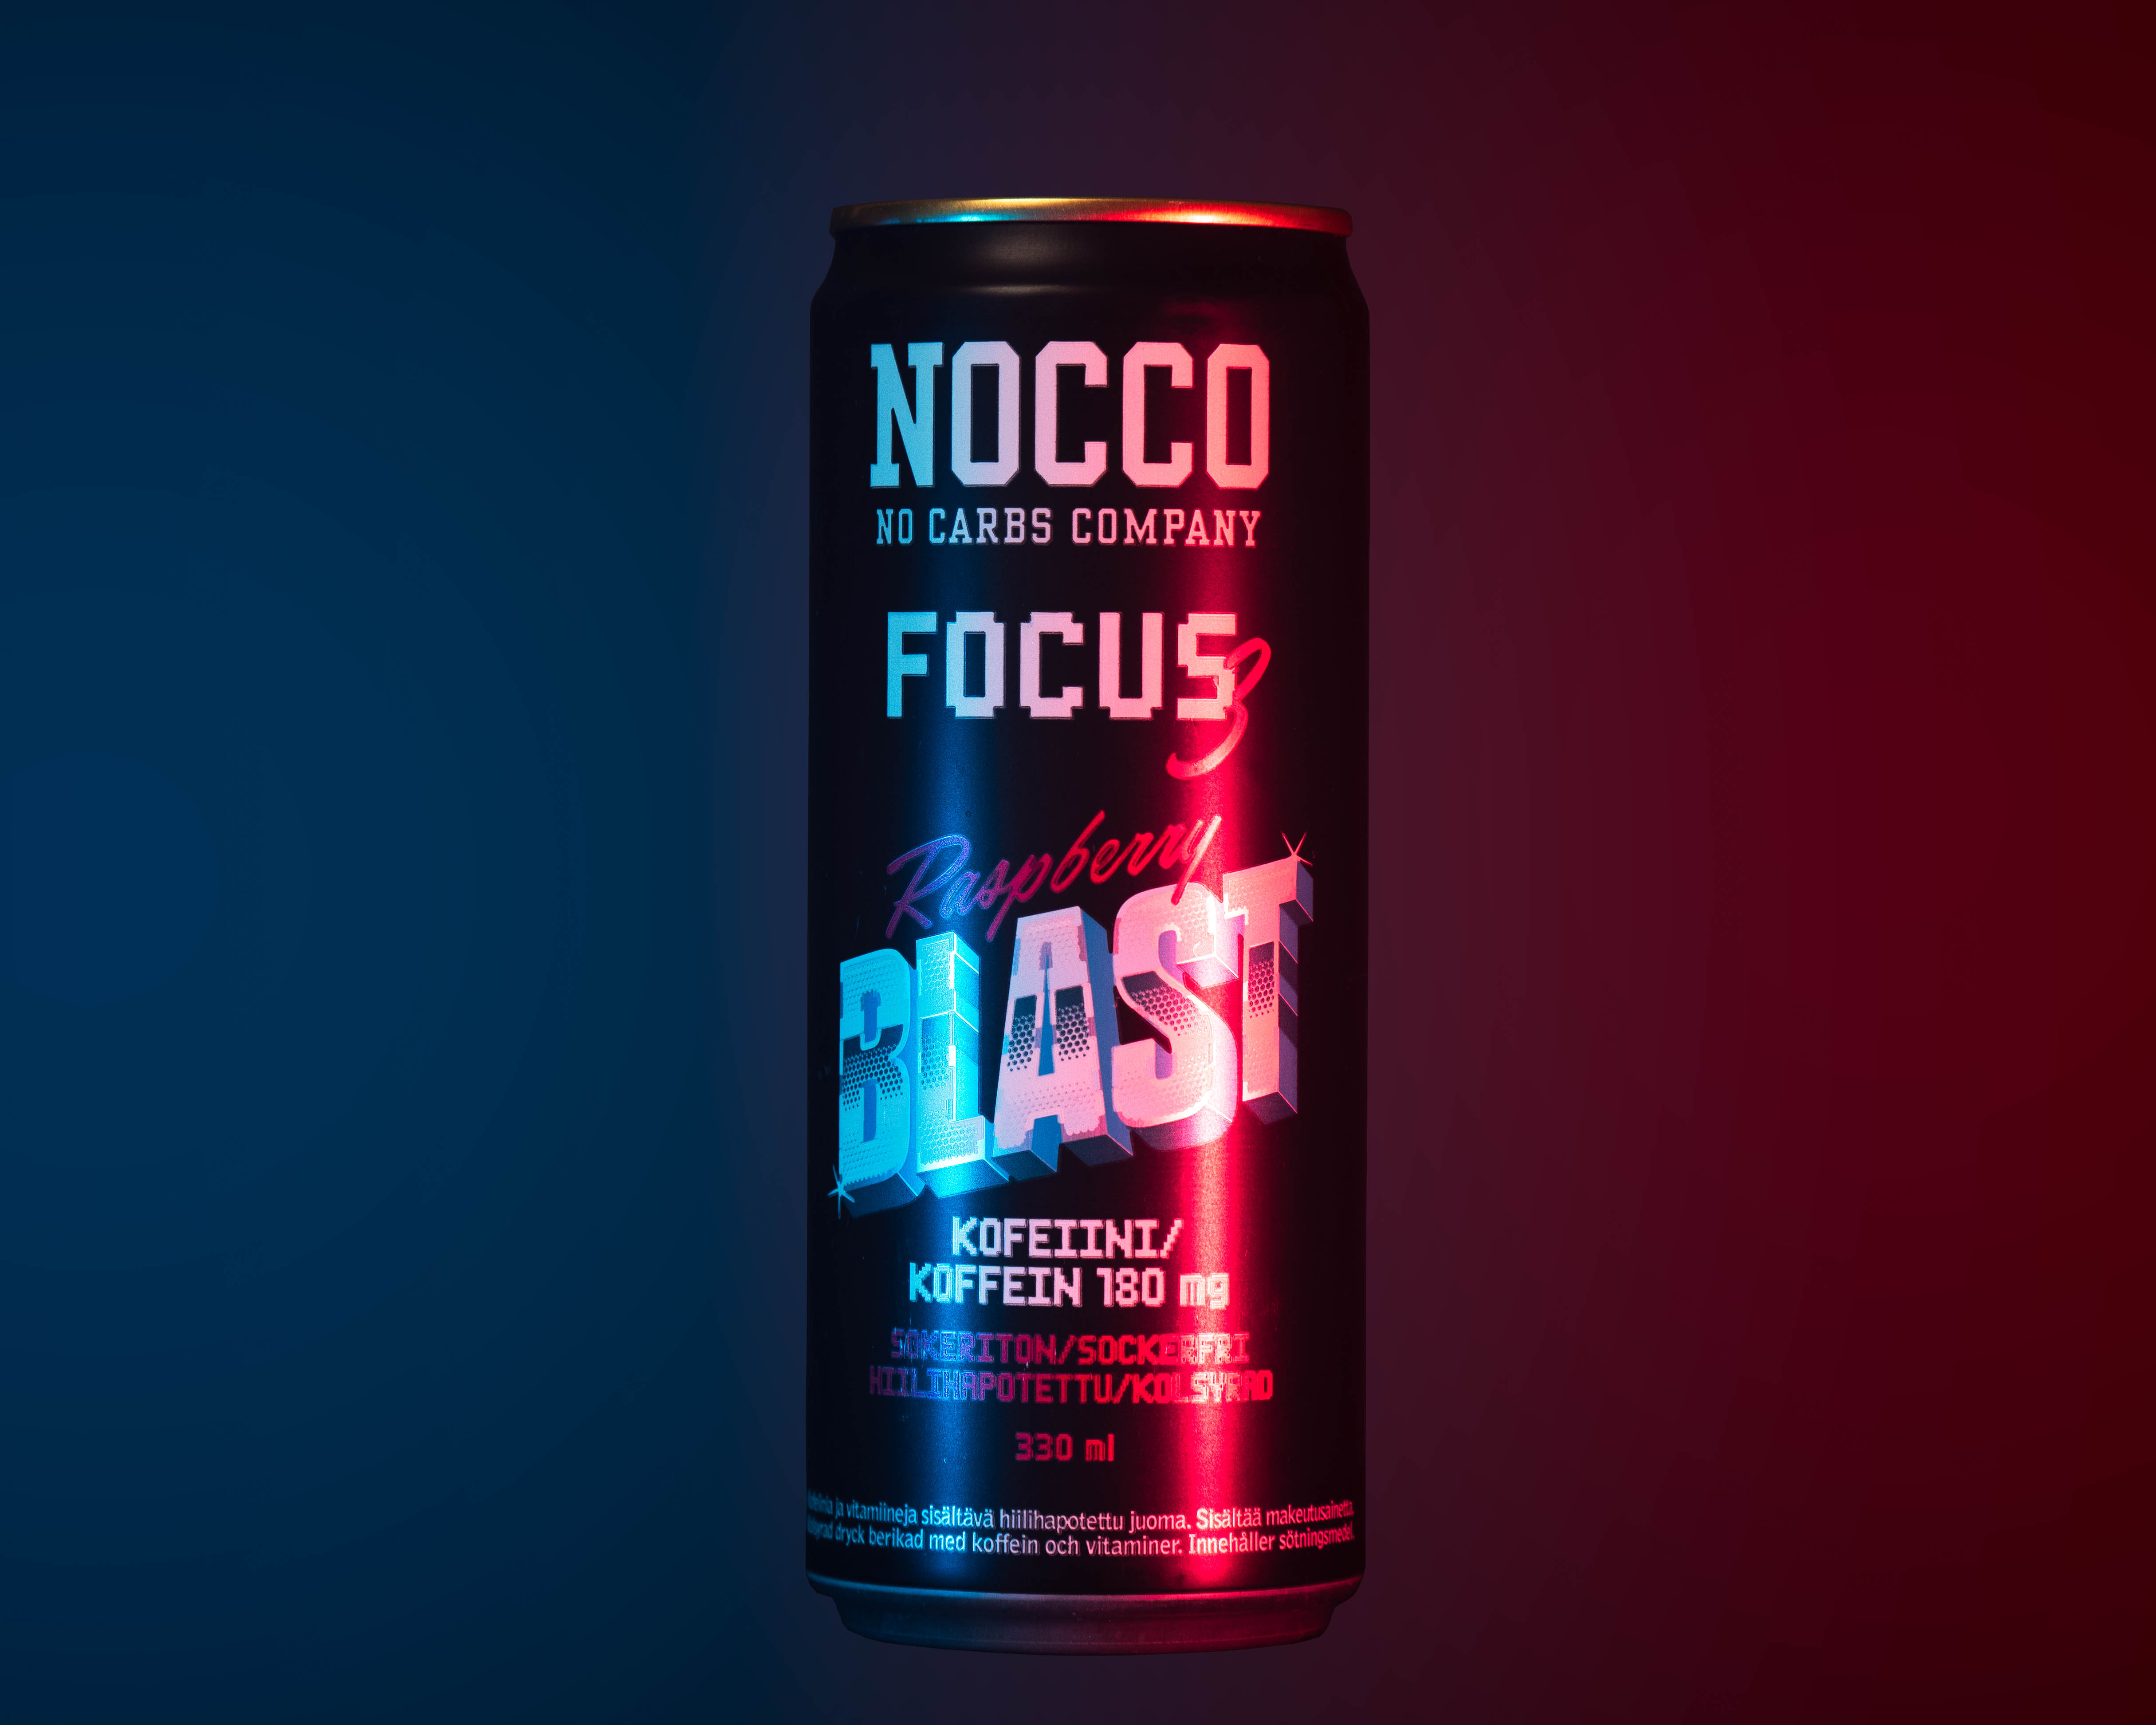 Nocco Focus 3 Raspberry blast can